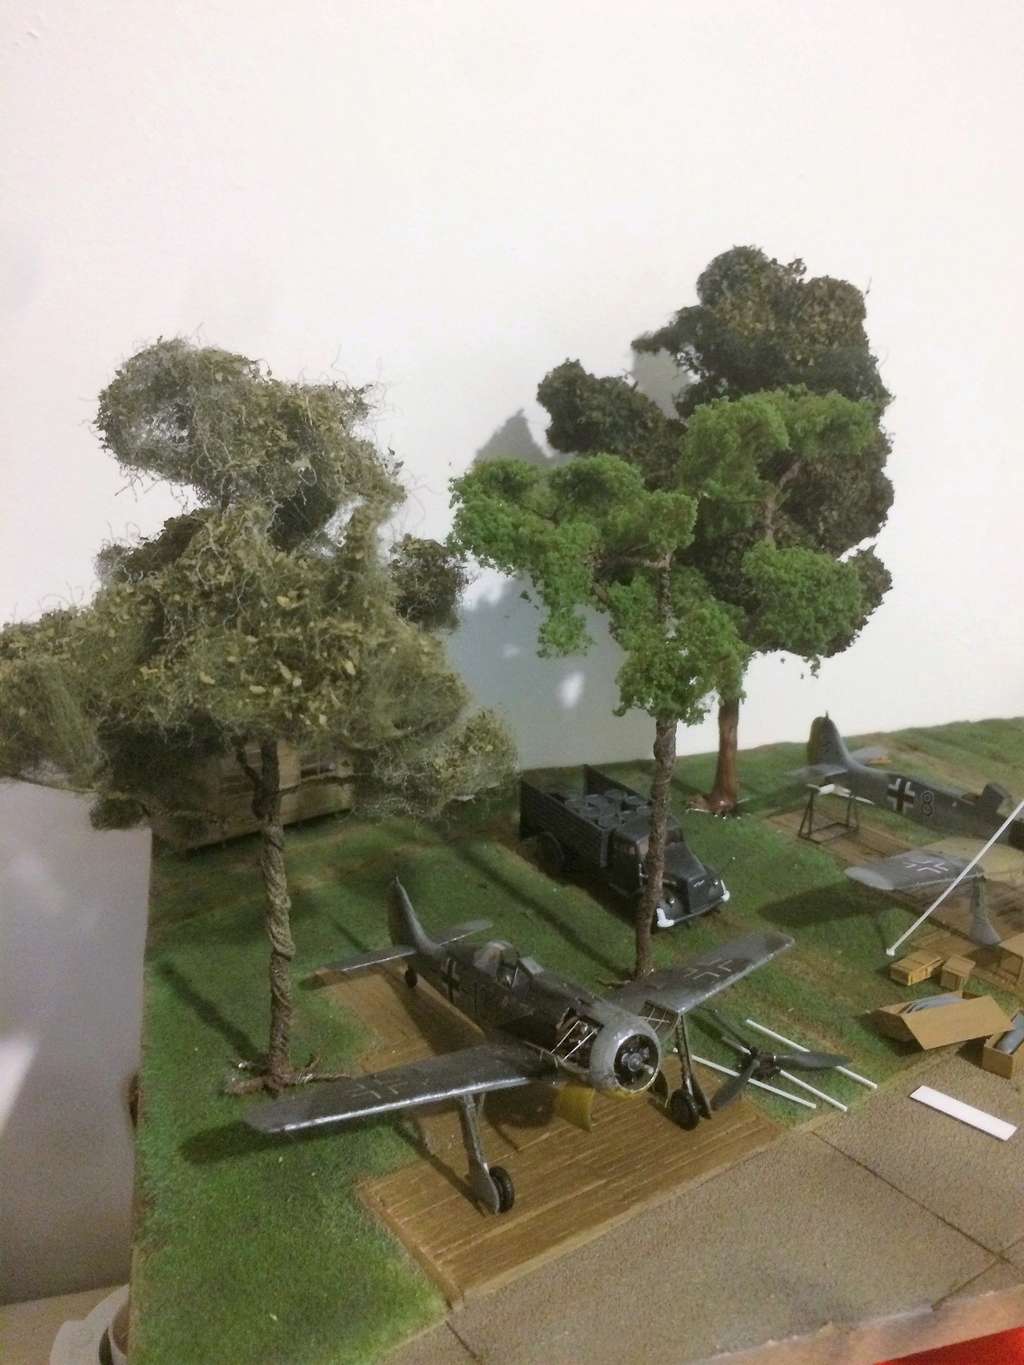 FW 190A8 - EDUARD ROYAL CLASS + Brassin -1/72 + projet diorama (Trois avions terminés) - Page 6 Img_7742